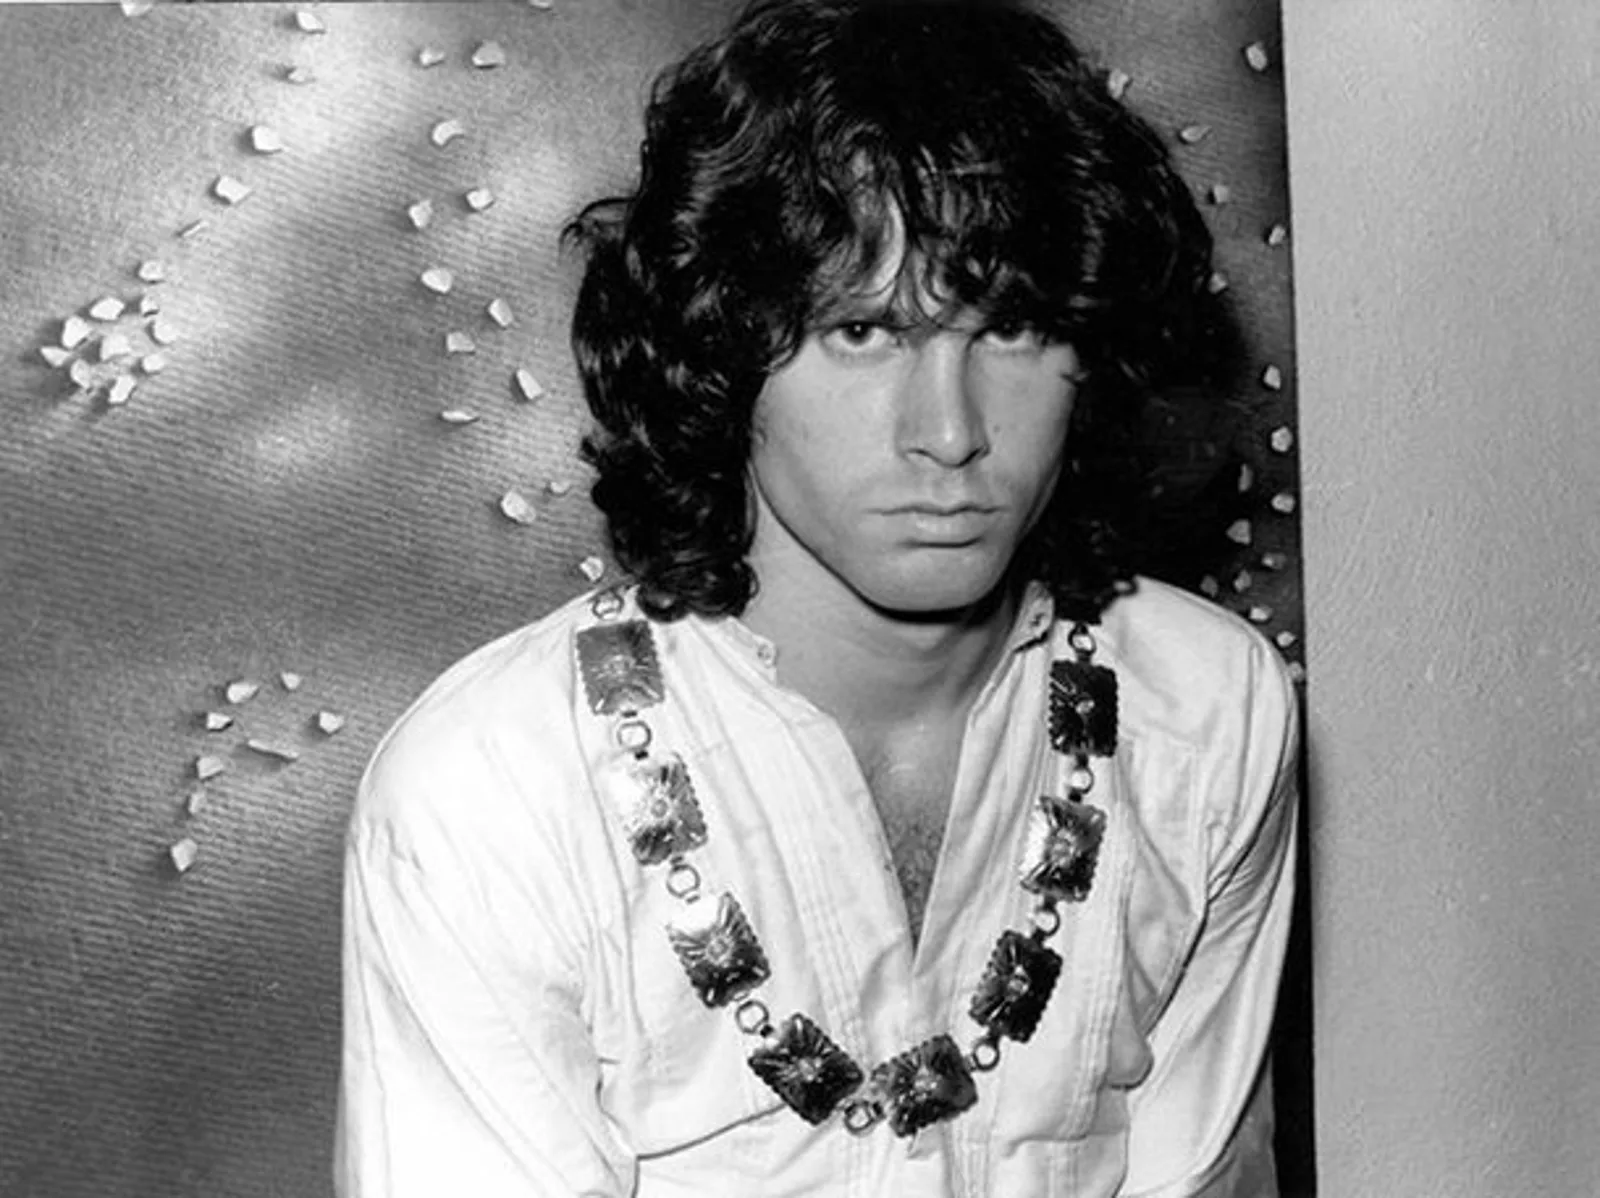 Джим моррисон википедия. Джим Моррисон. The Doors Джим Моррисон. Doors группа Джимм Моррисон. Джим Моррисон 1971.